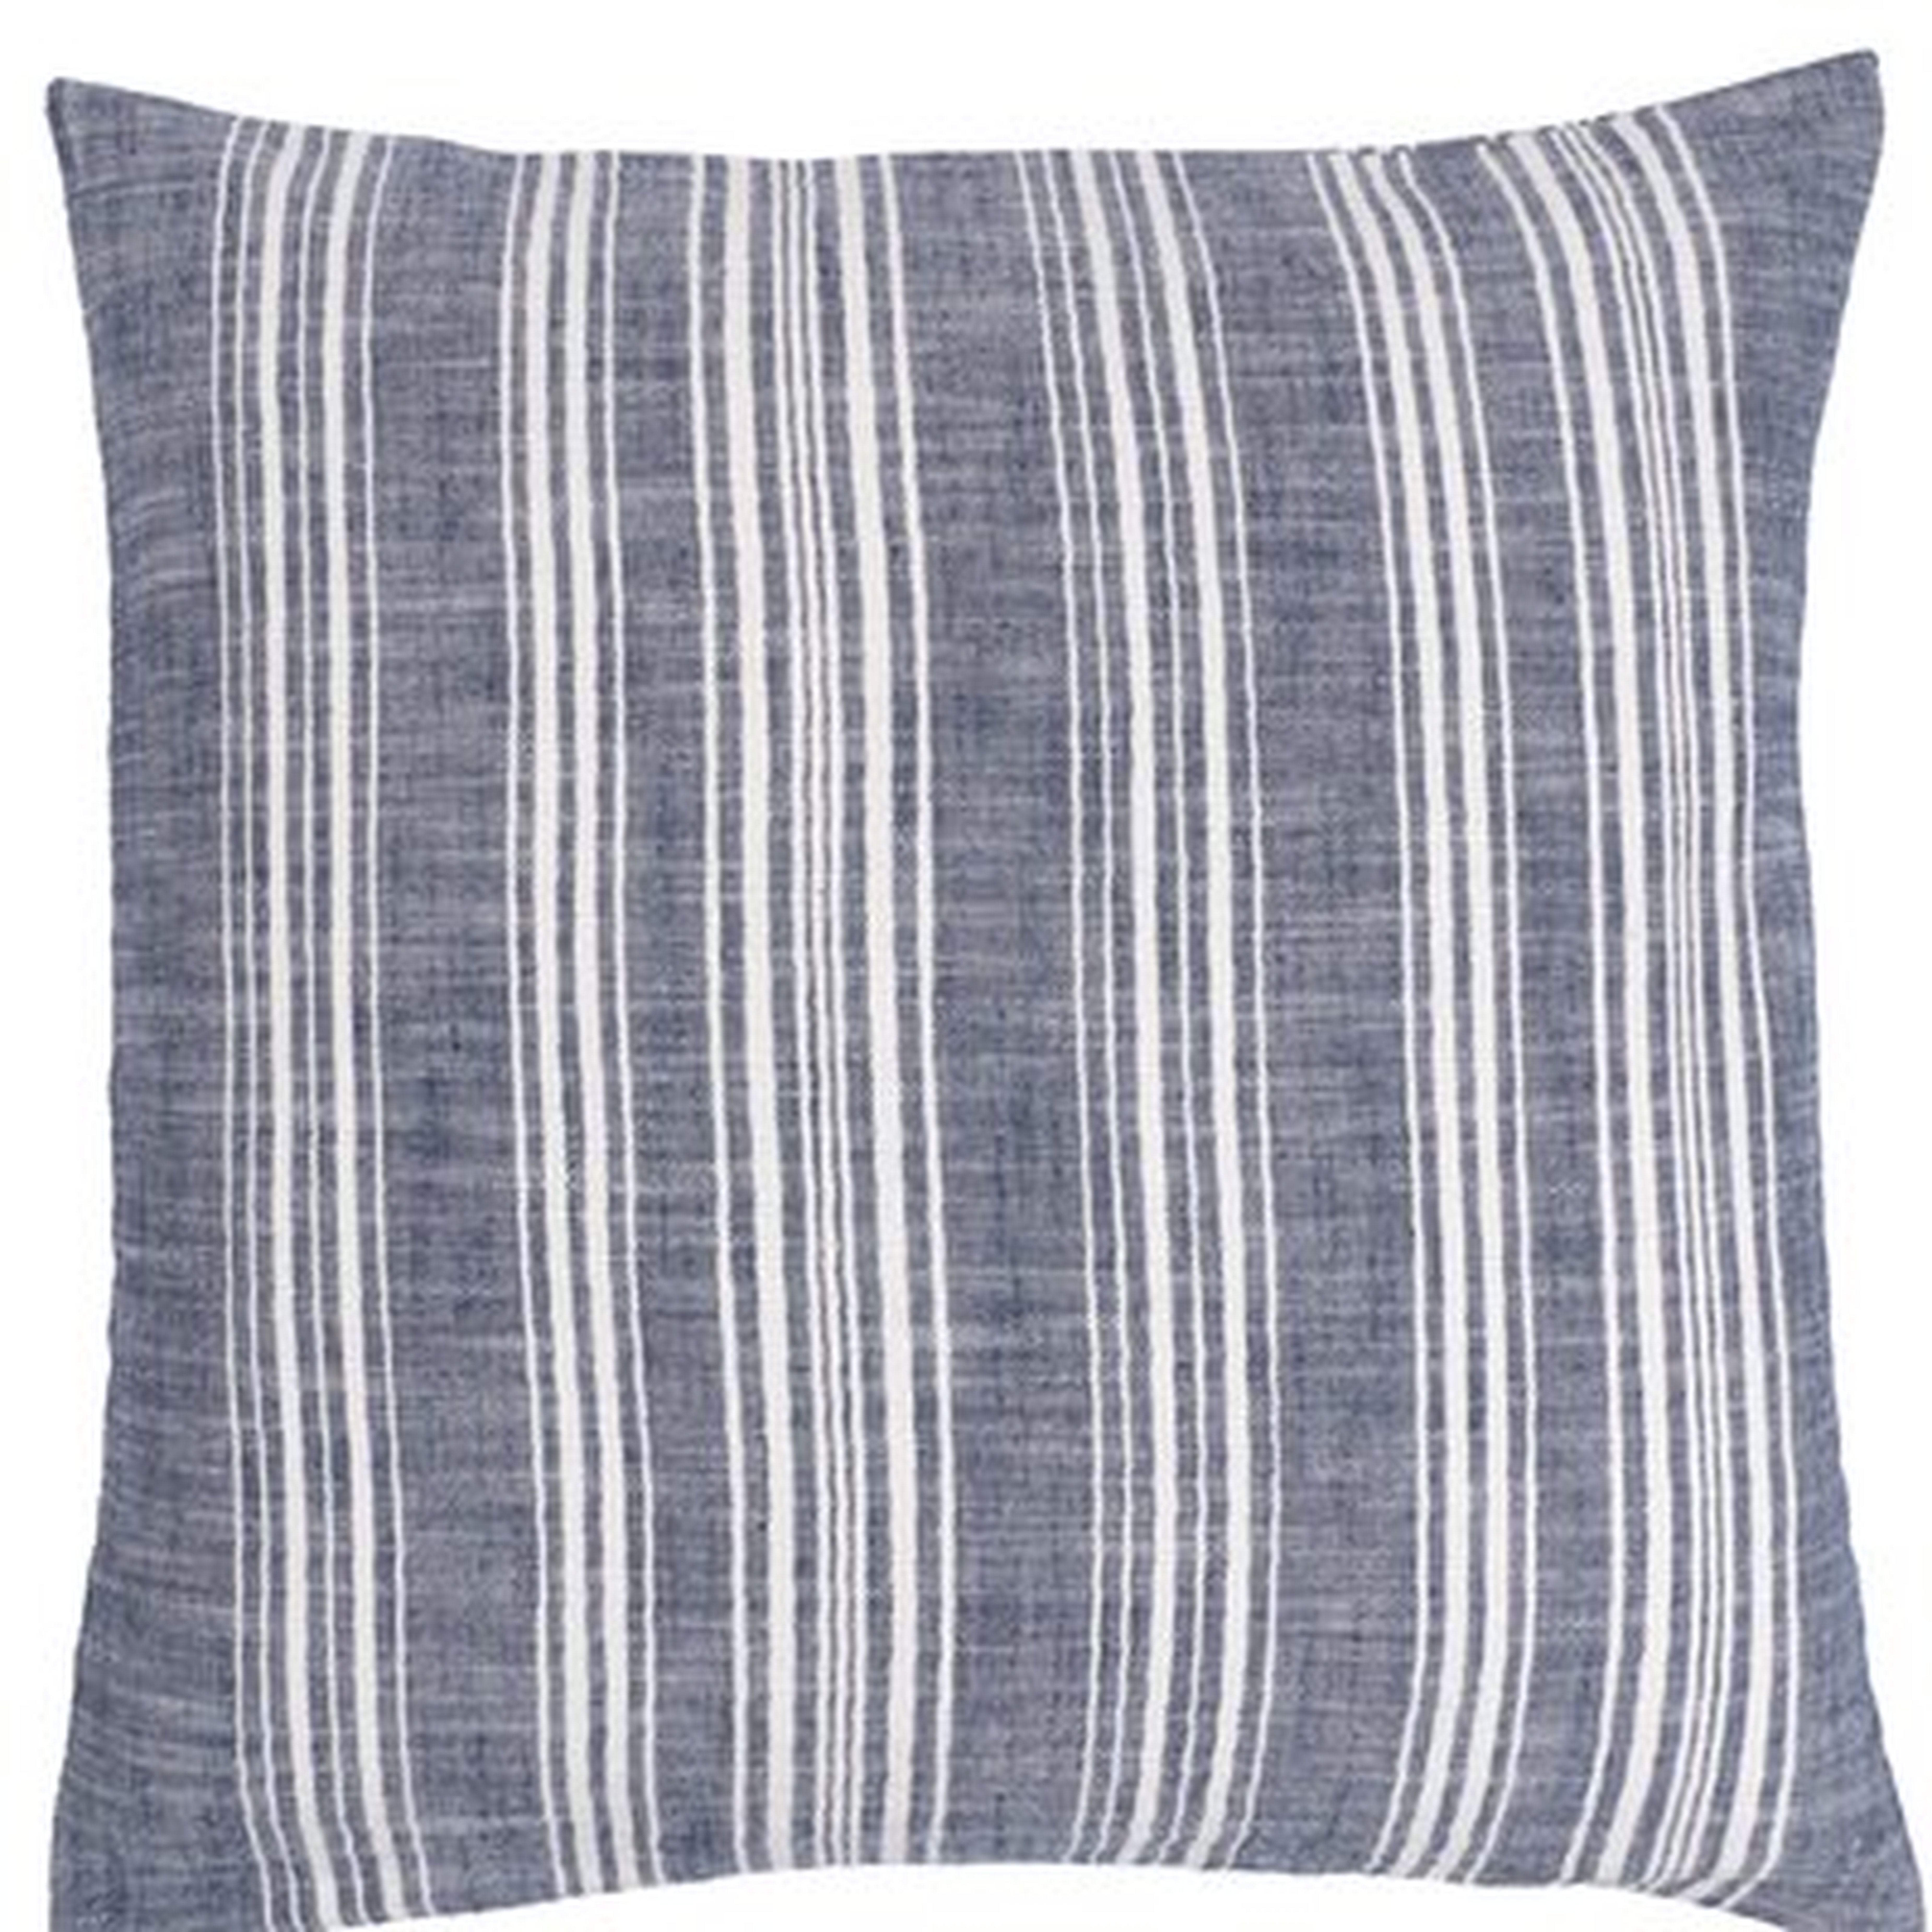 Herringbone Blue Stripe Throw Pillow, 20X20 Inches - Wayfair